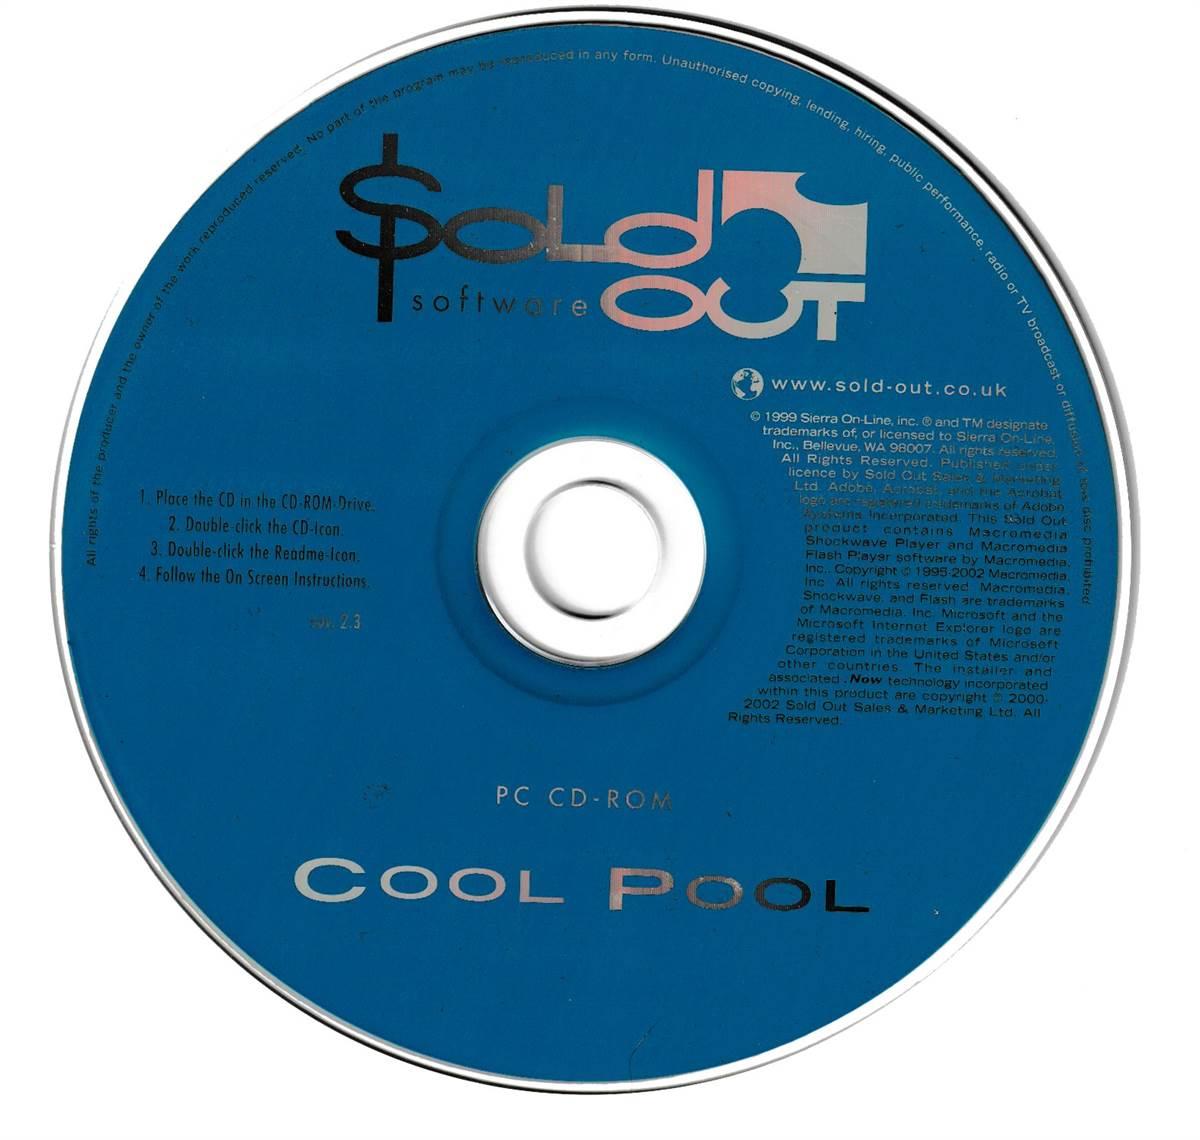 Cool Pool - Classic Windows PC Game